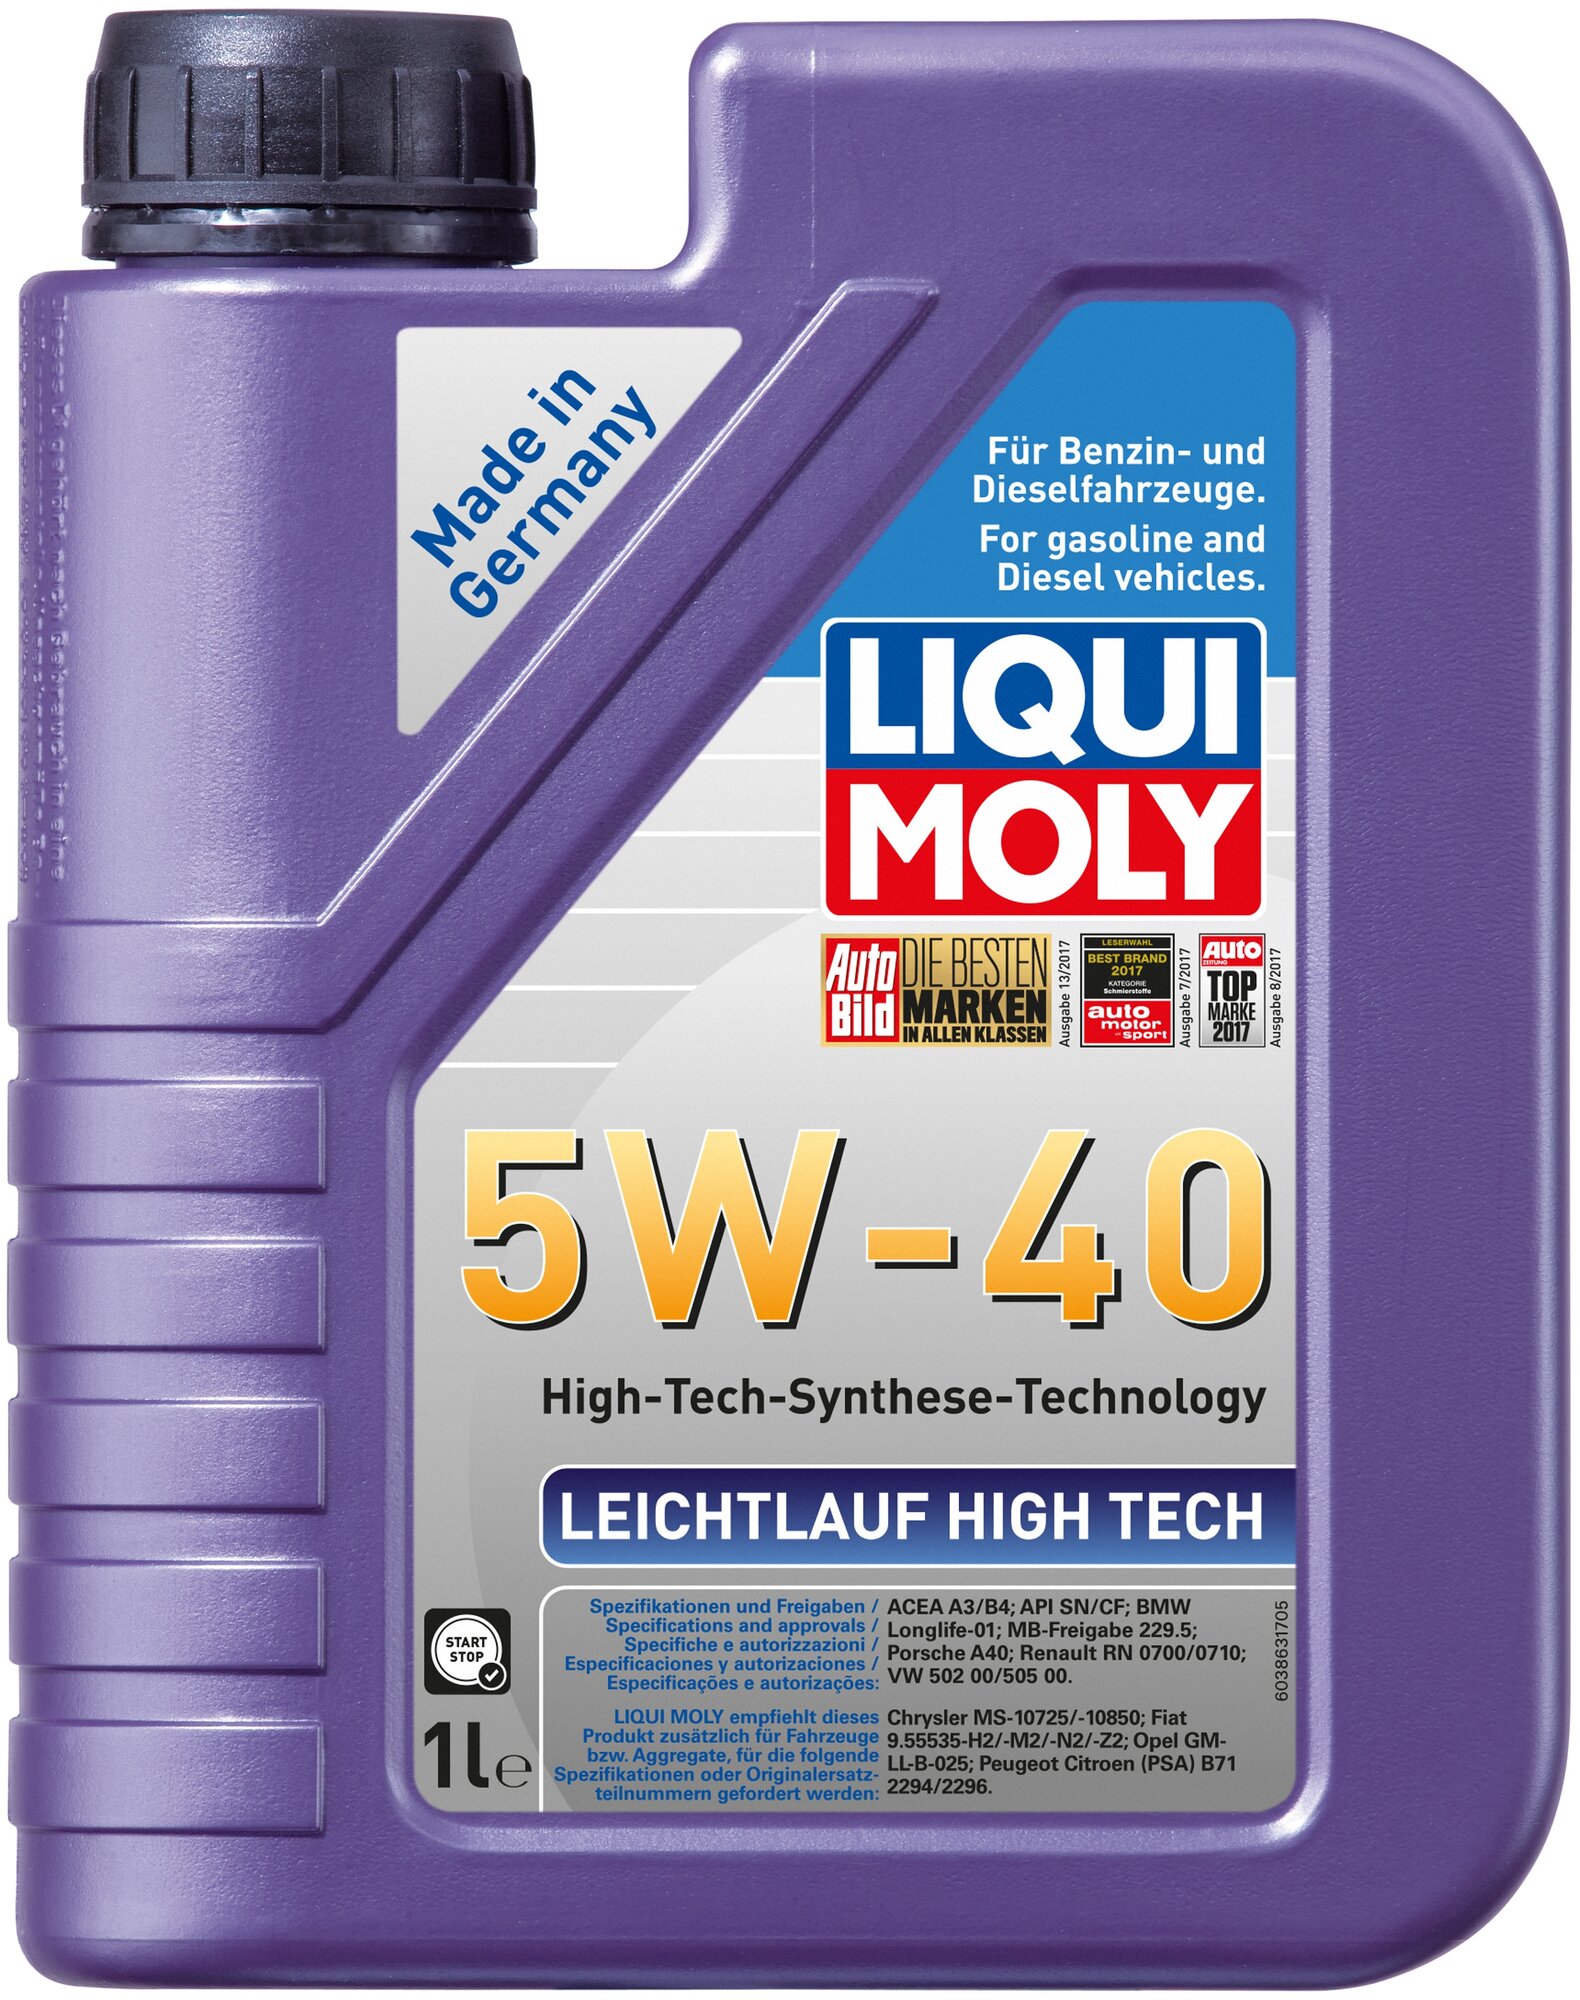 HC-синтетическое моторное масло LIQUI MOLY Leichtlauf High Tech 5W-40